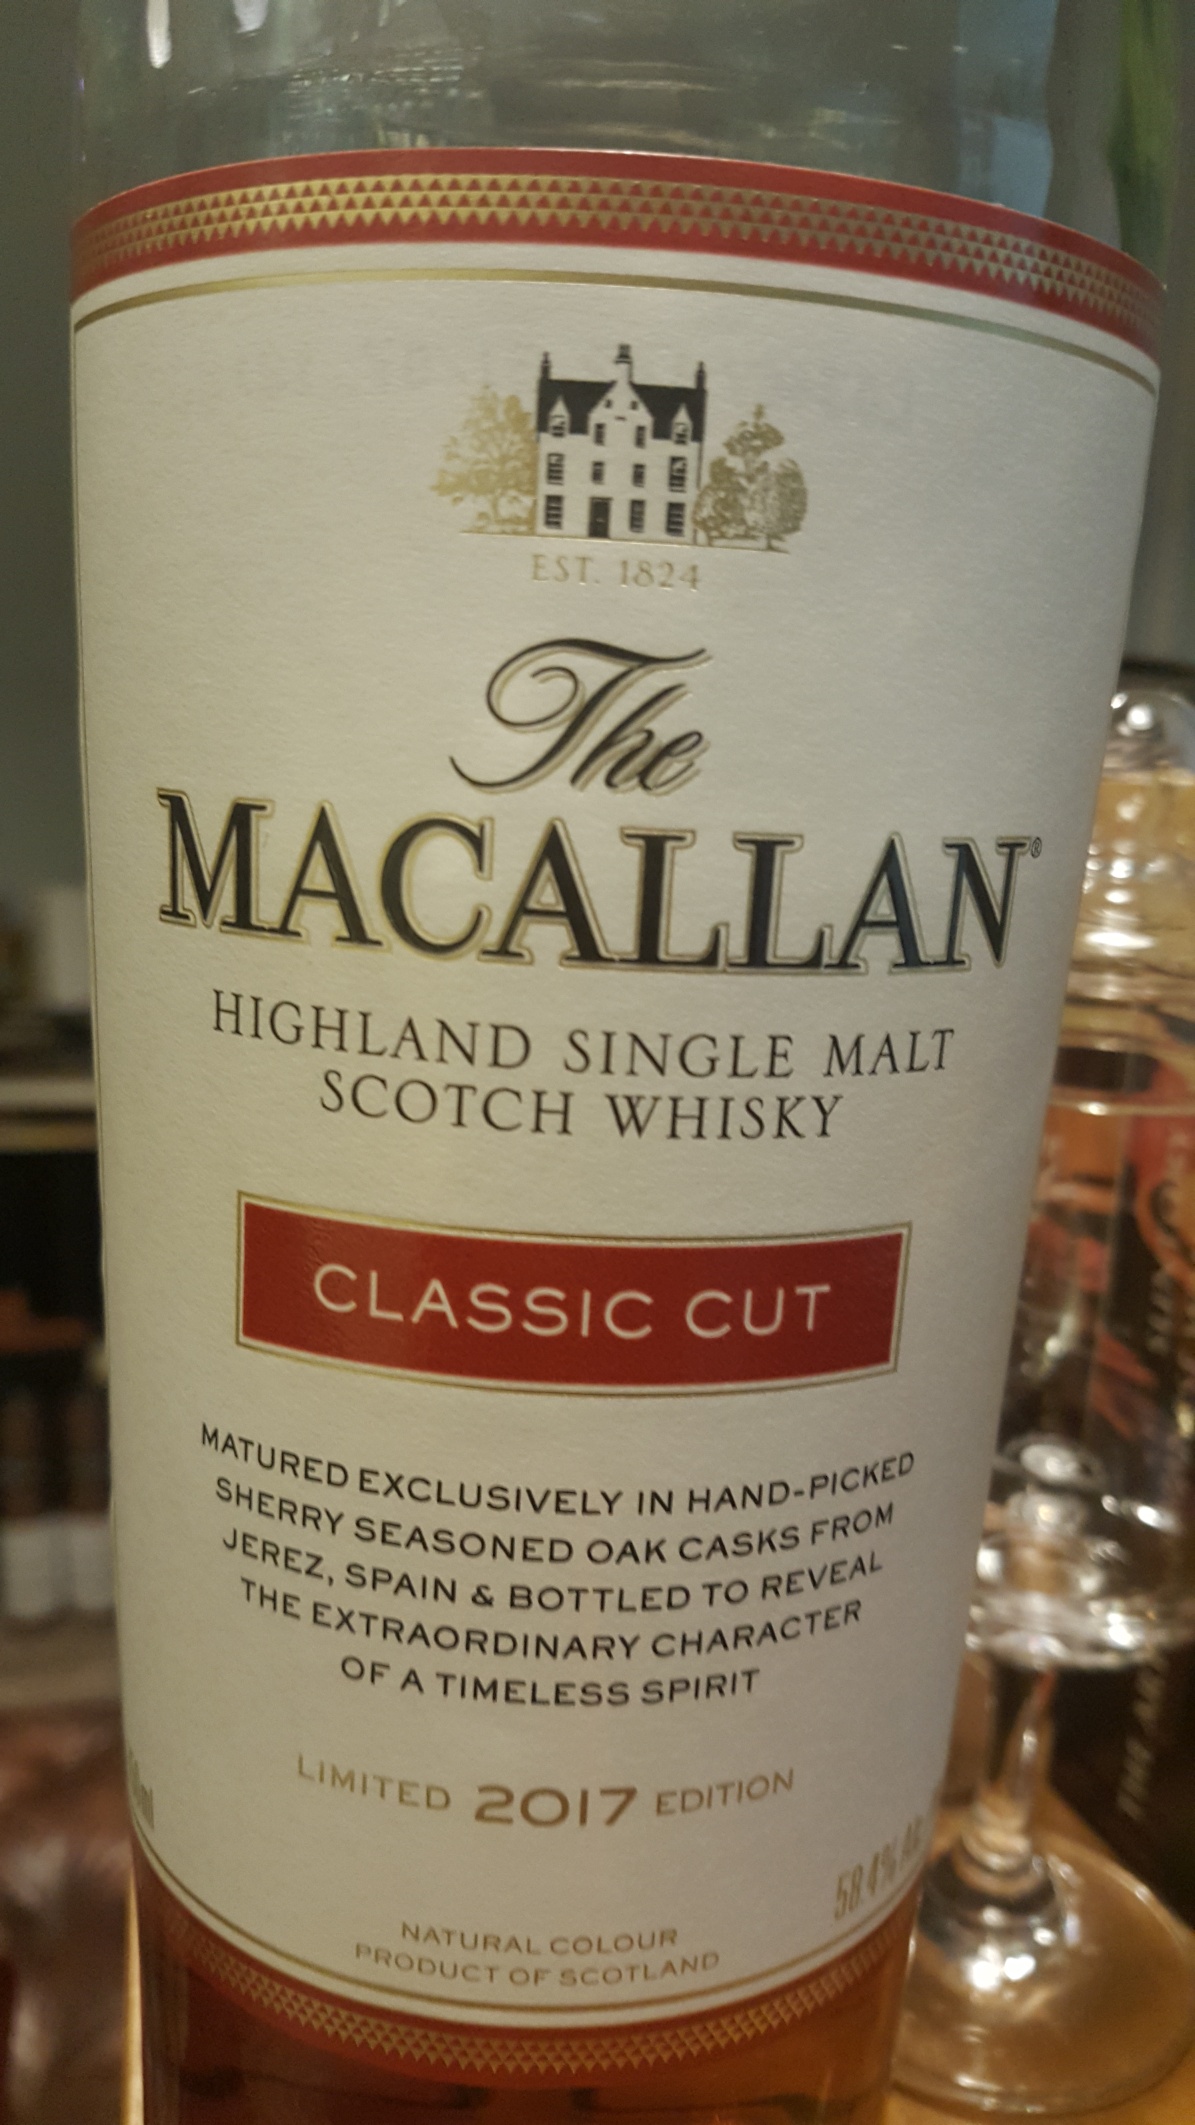 Macallan Classic Cut 吹皺一池春水